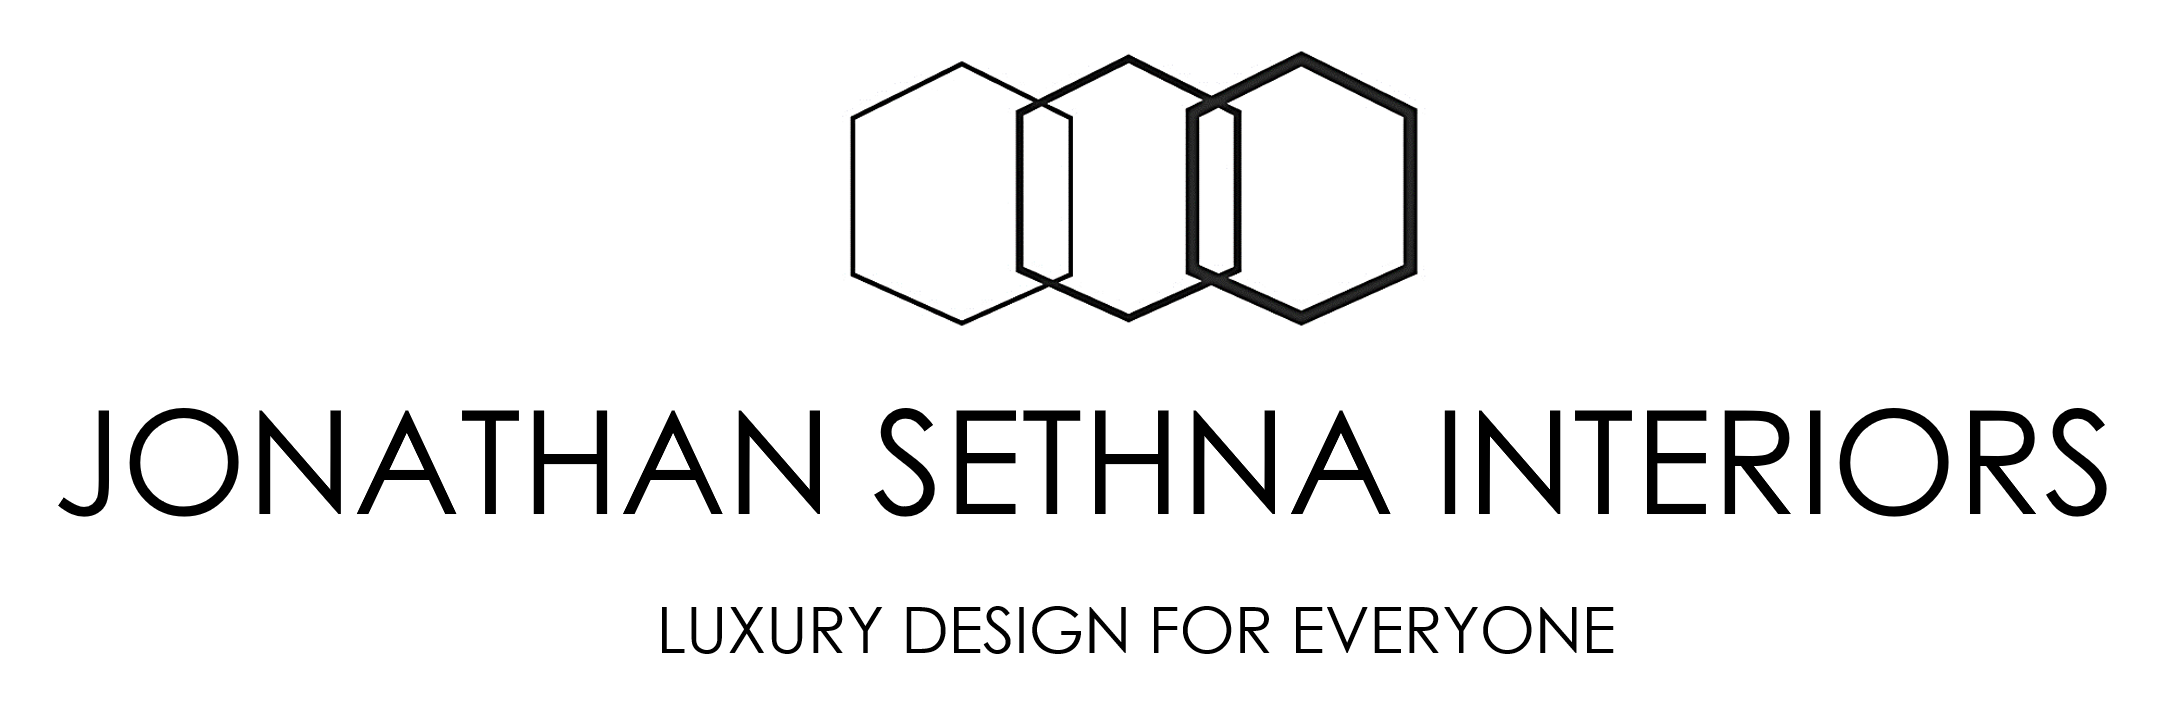 Jonathan Sethna Interiors's Logo